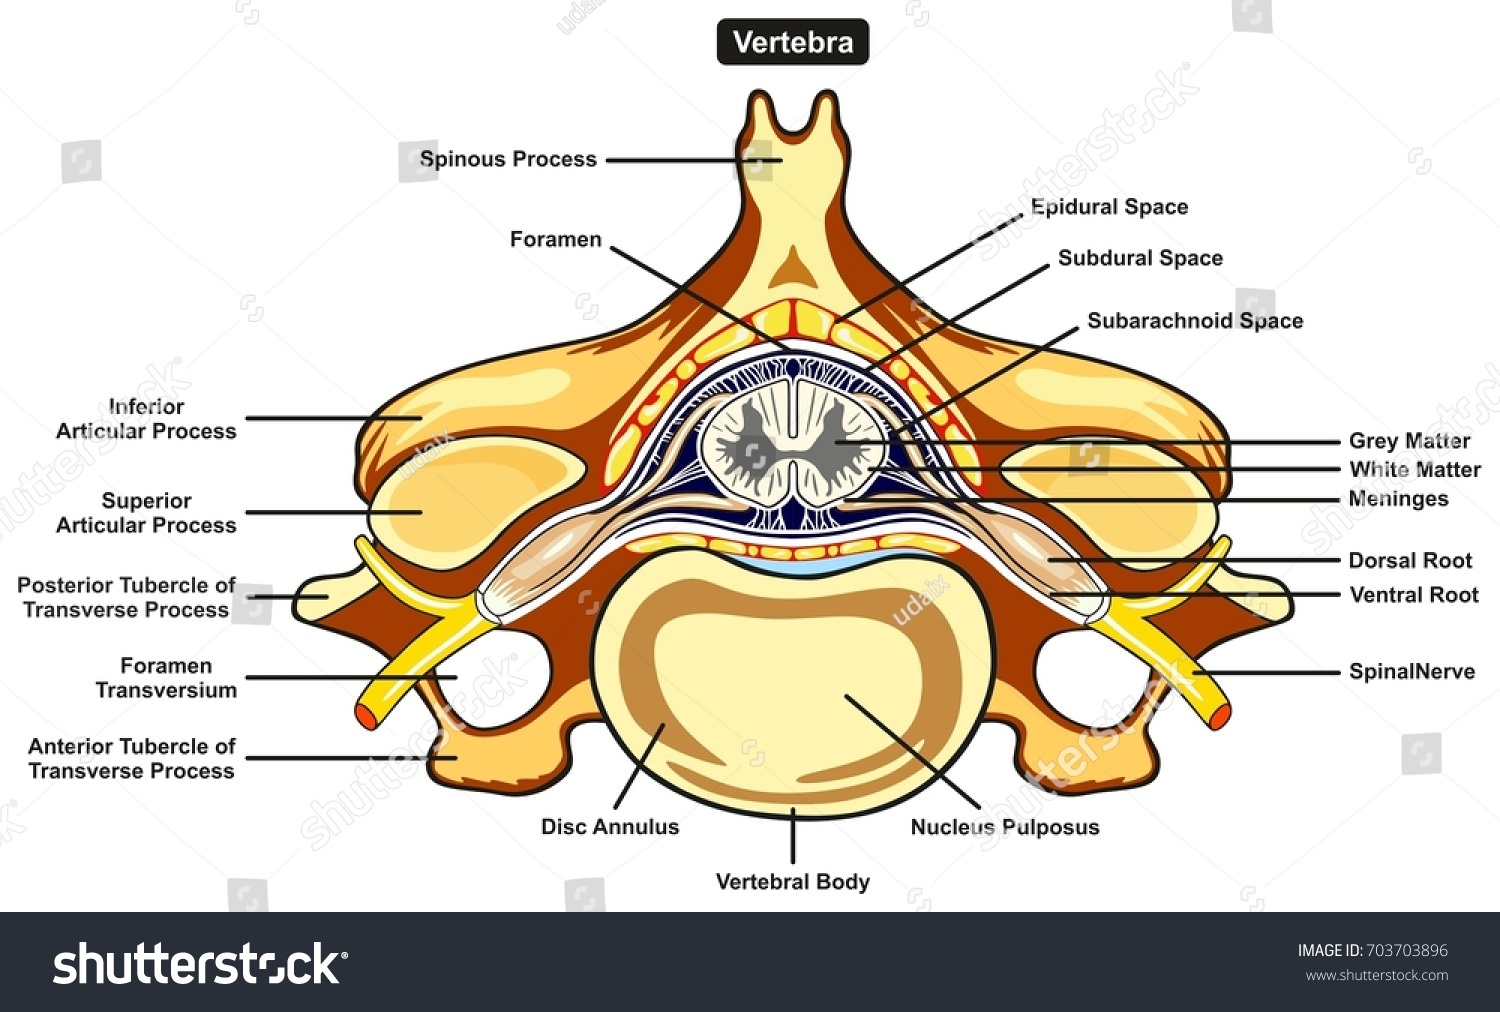 Vertebra Cross Section Human Body Anatomy Stock Illustration 703703896 Shutterstock 9356